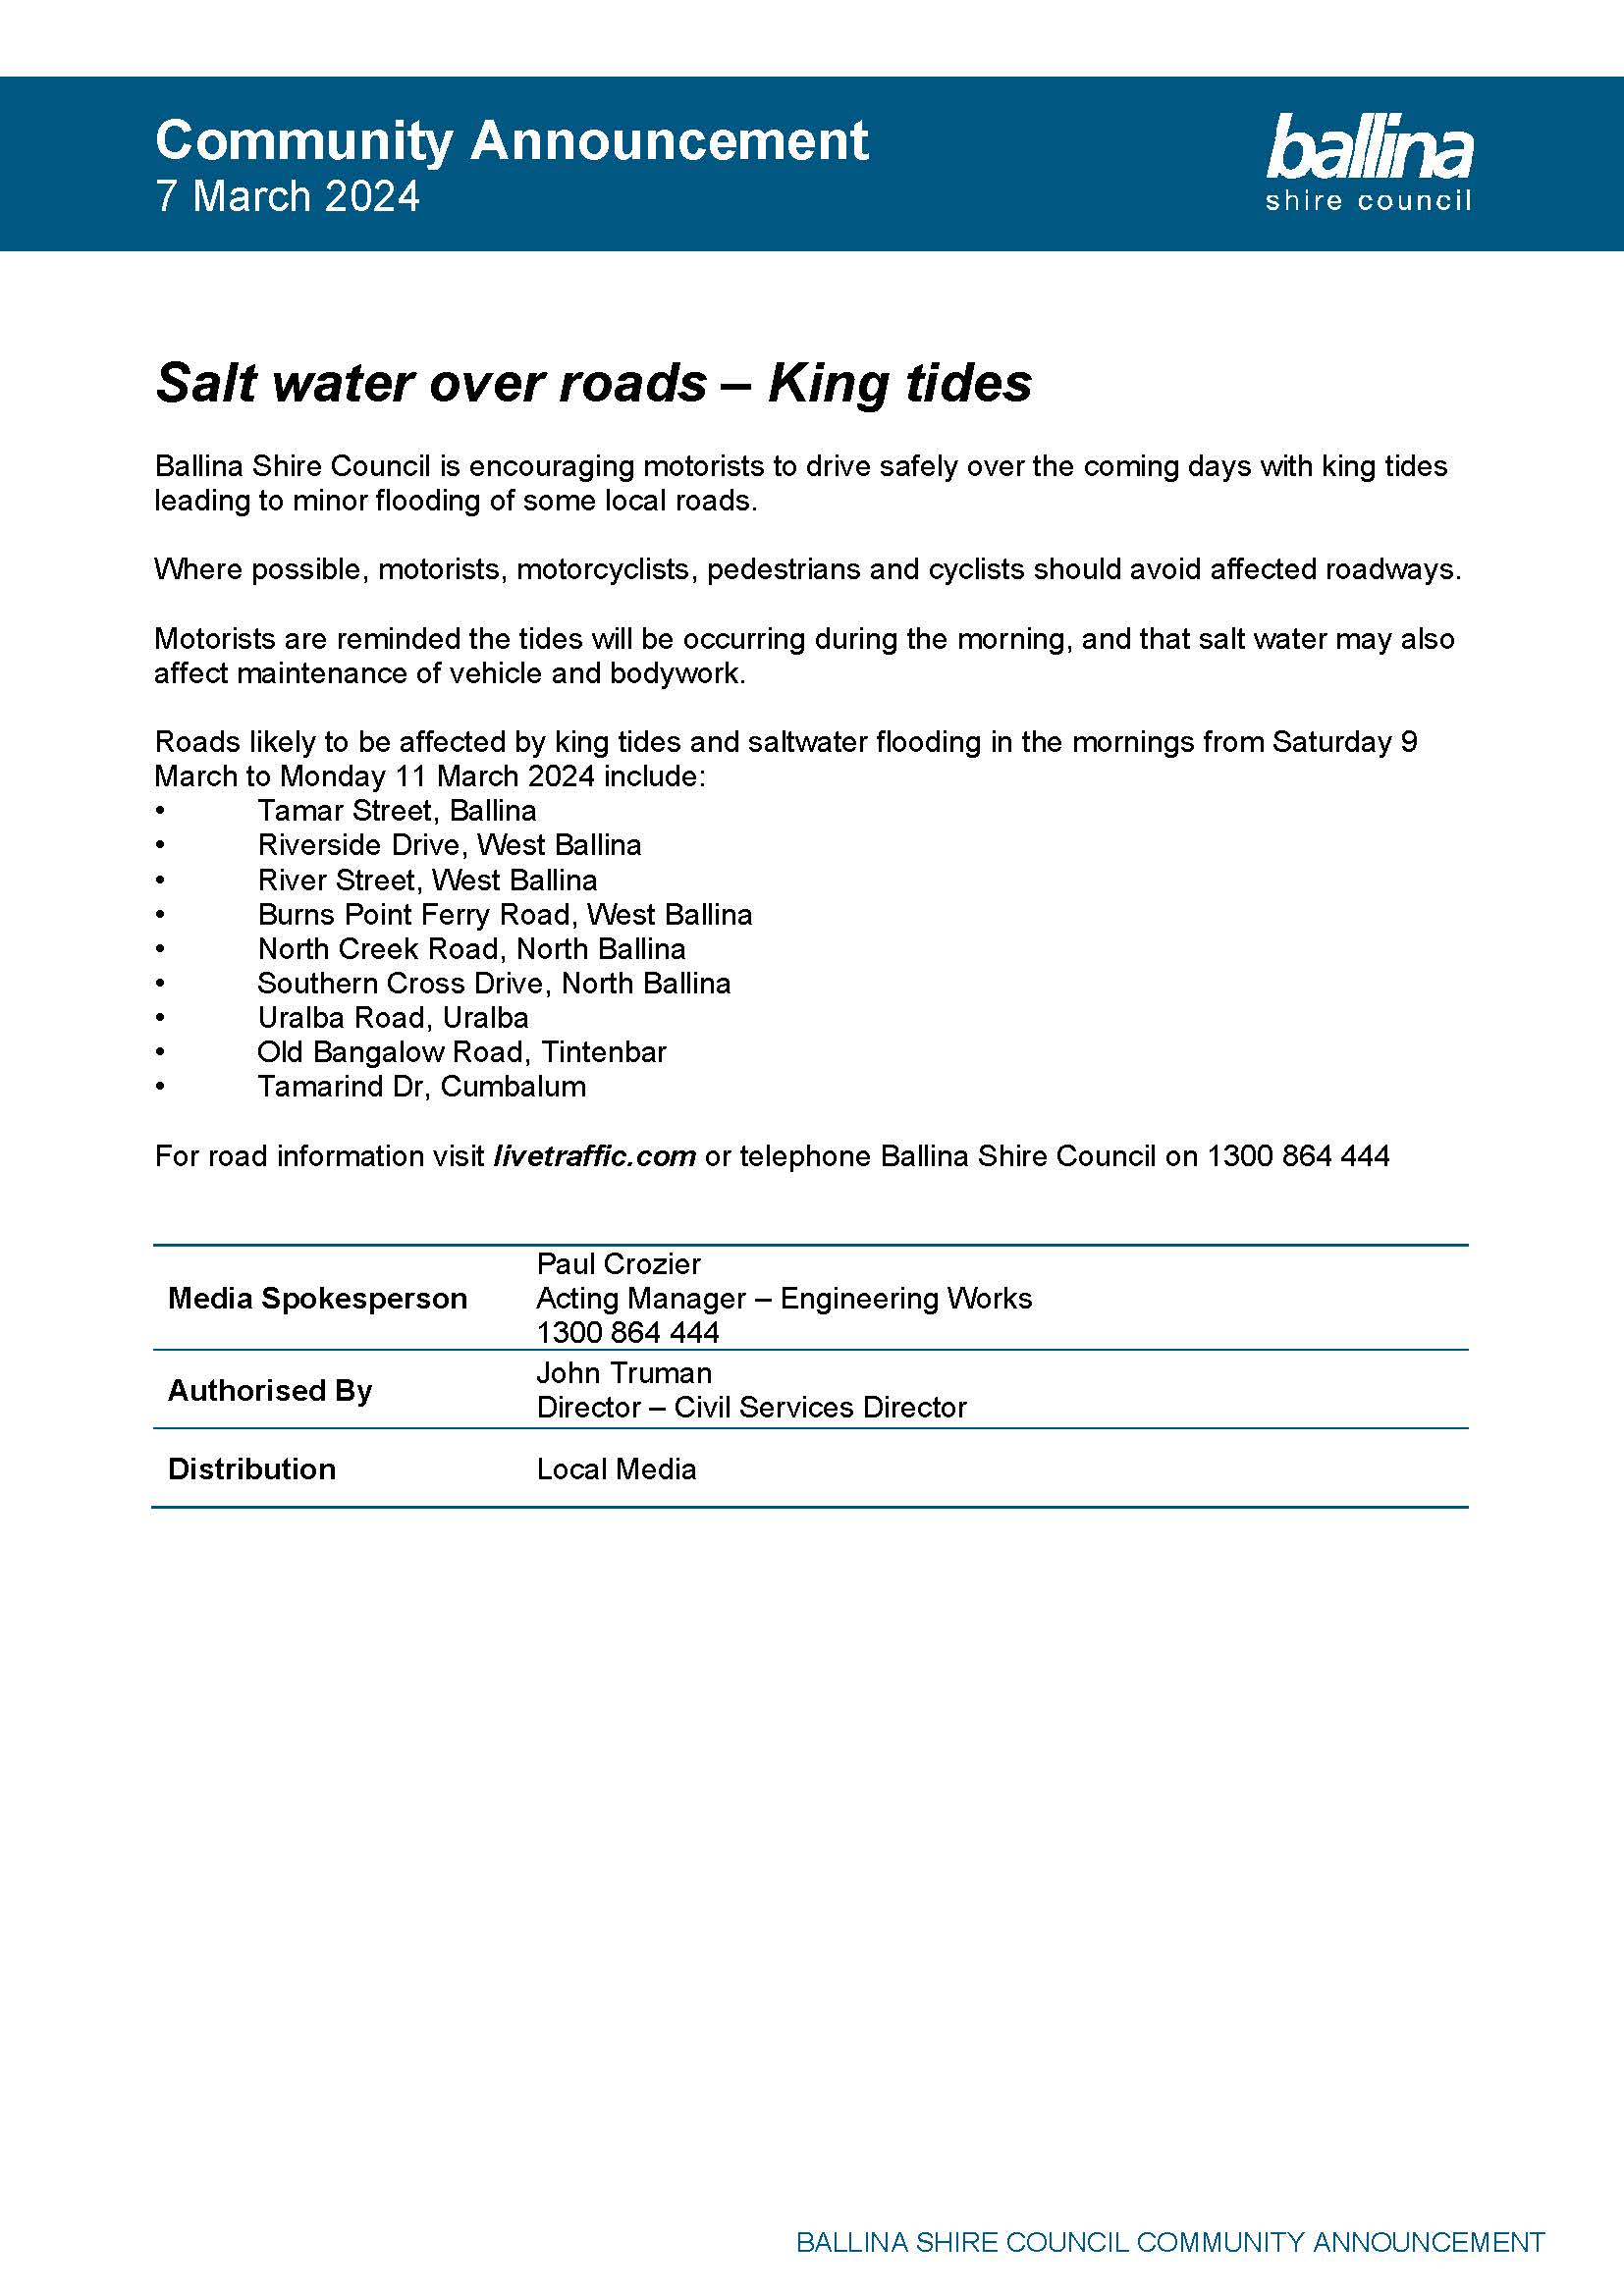 Community announcement - Salt water over roads 9-11 March 2024